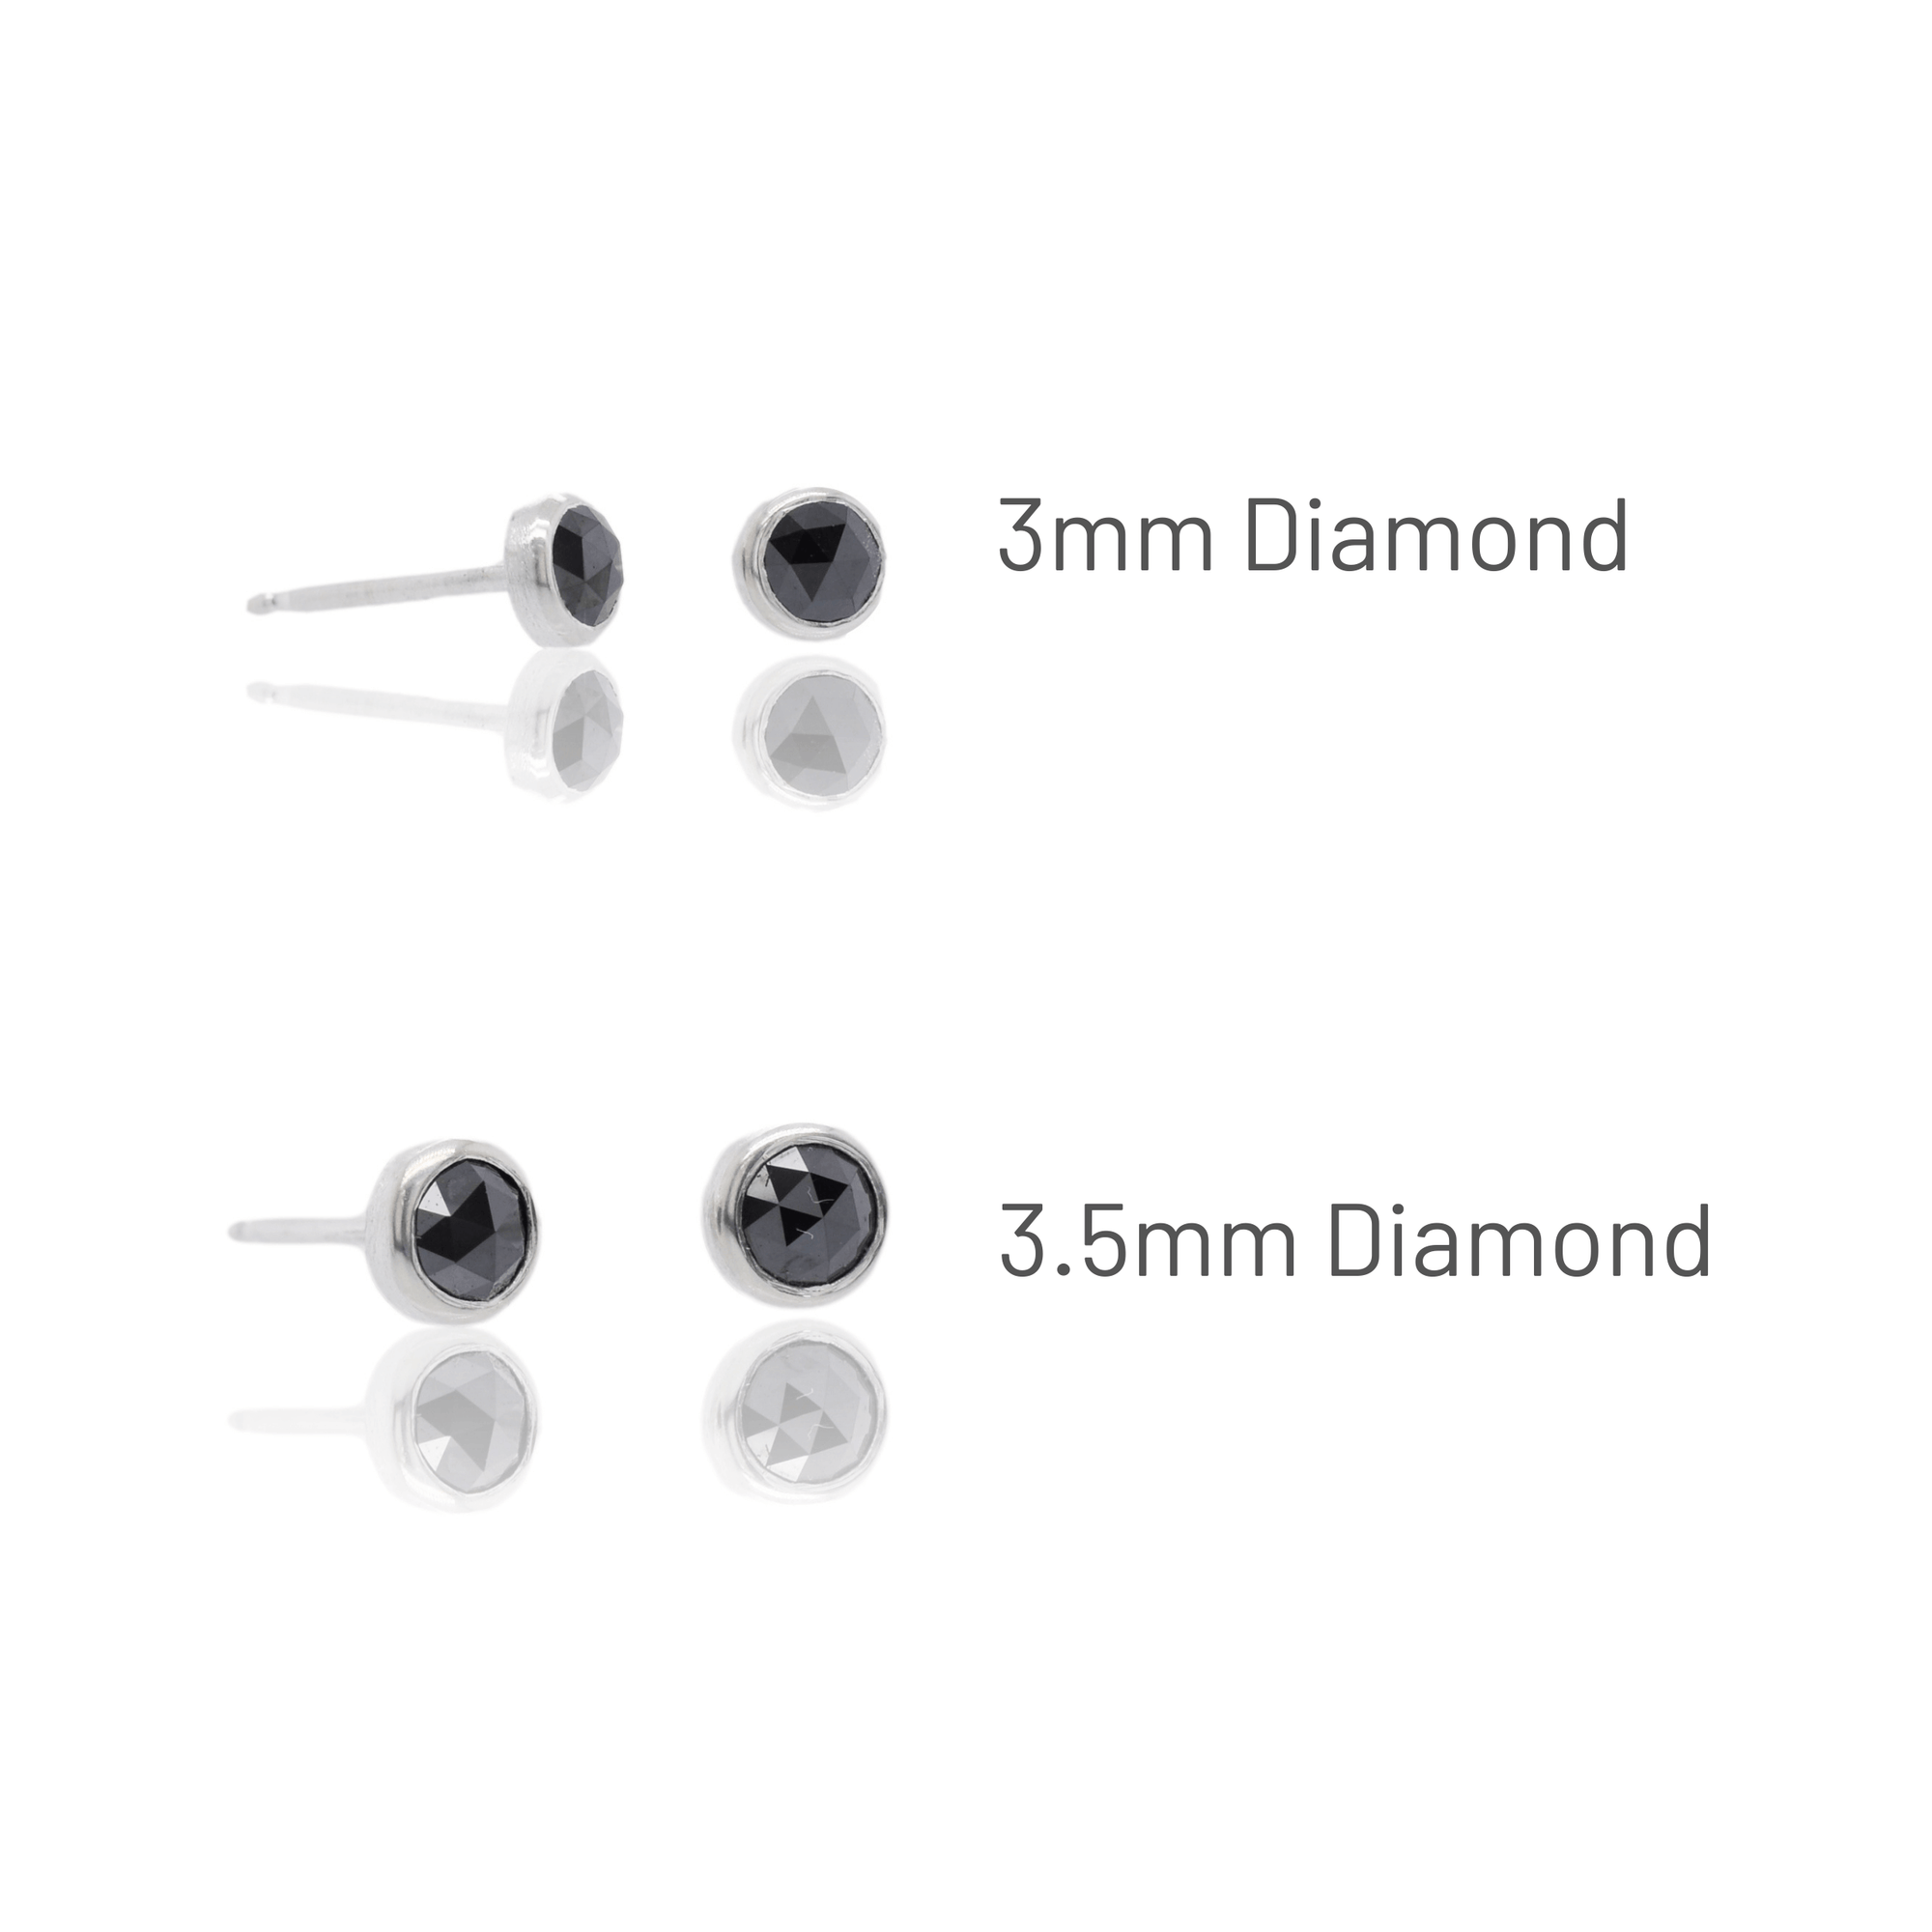 Black diamond stud earrings in sterling silver.